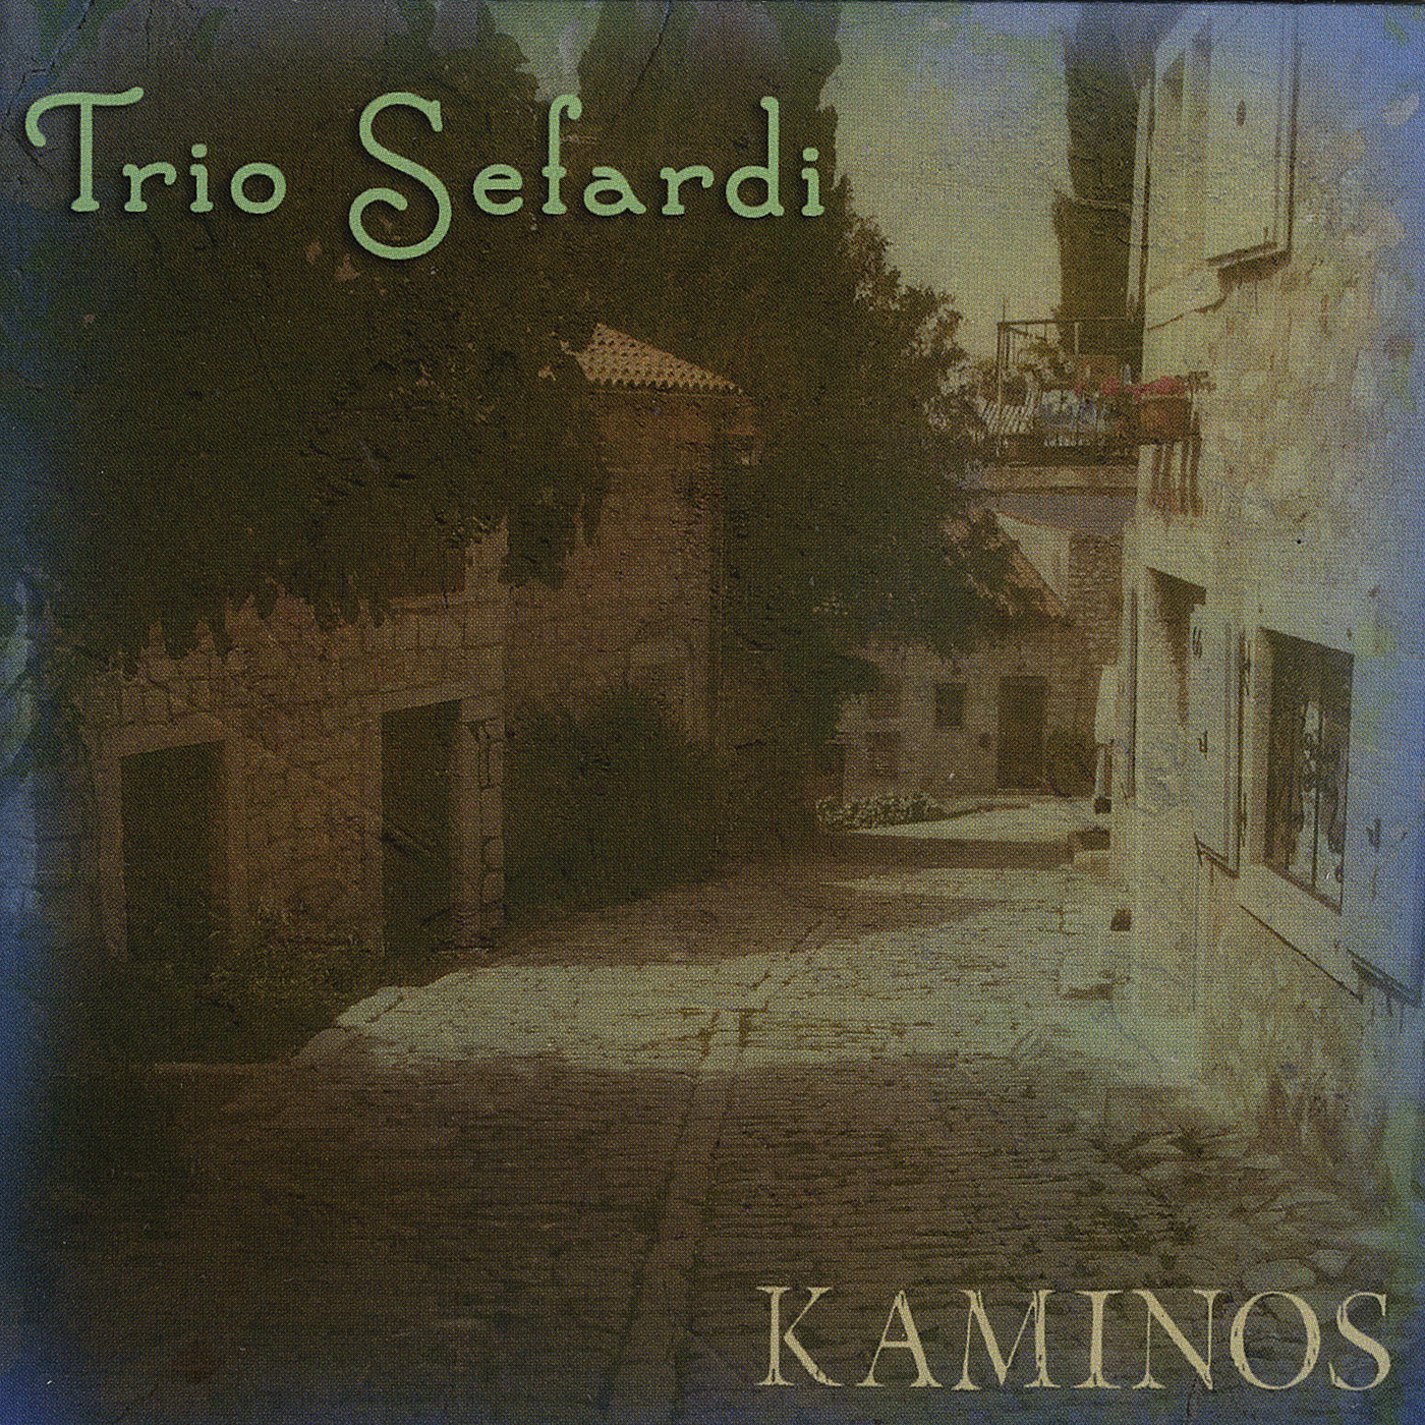 <b>Trio Sefardi</b></br>Kaminos</br><I><small>Stereo Master</small></I>